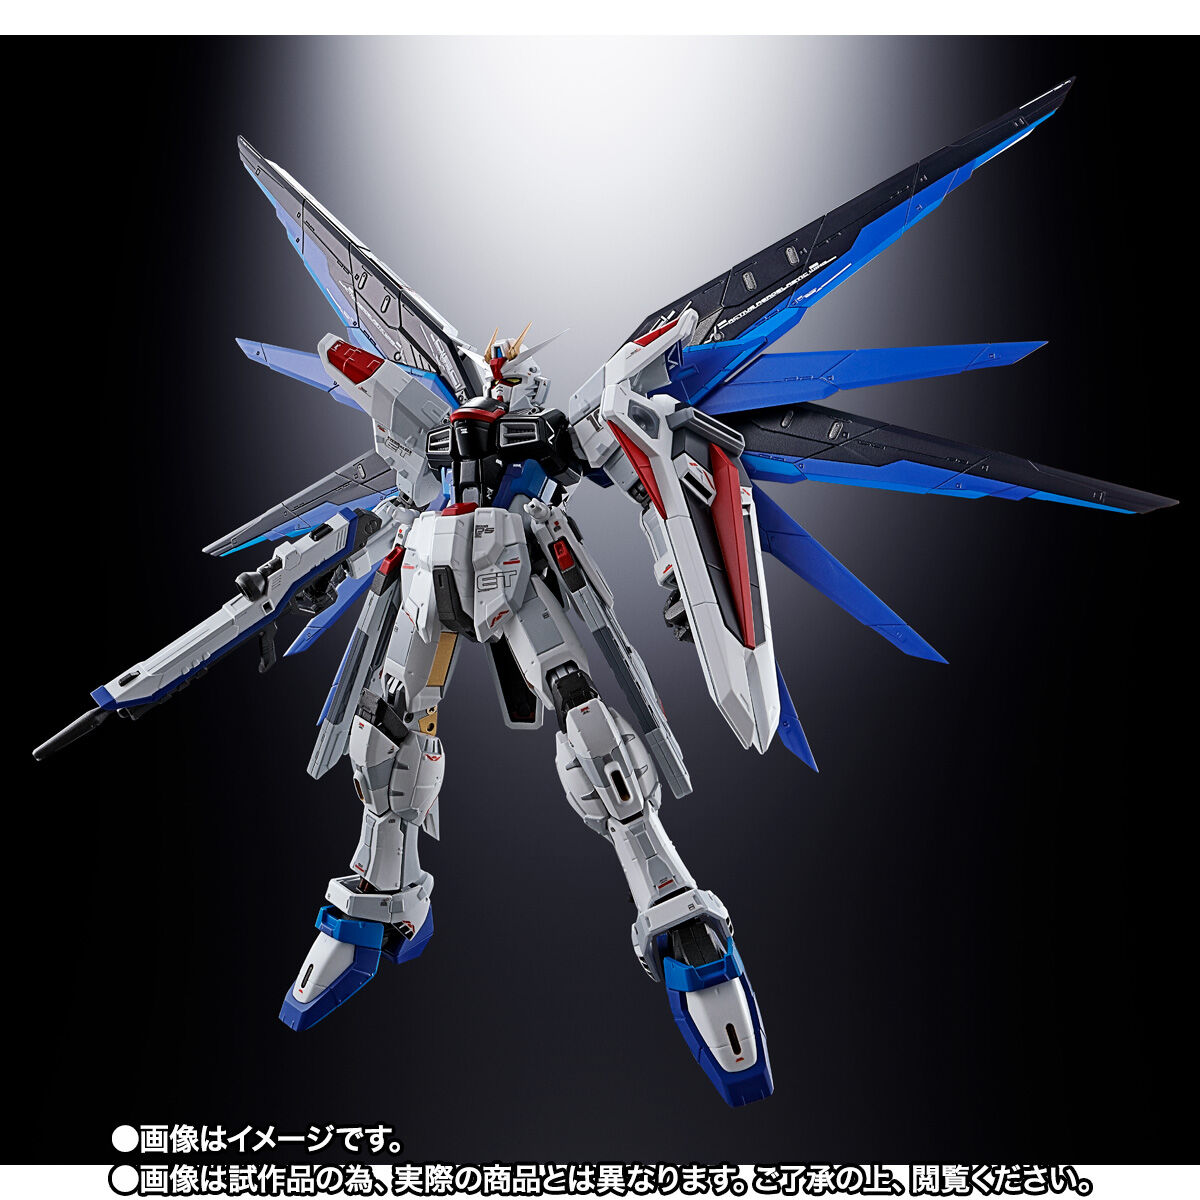 Chogokin ZGMF-X10A Freedom Gundam(Gundam China Project)